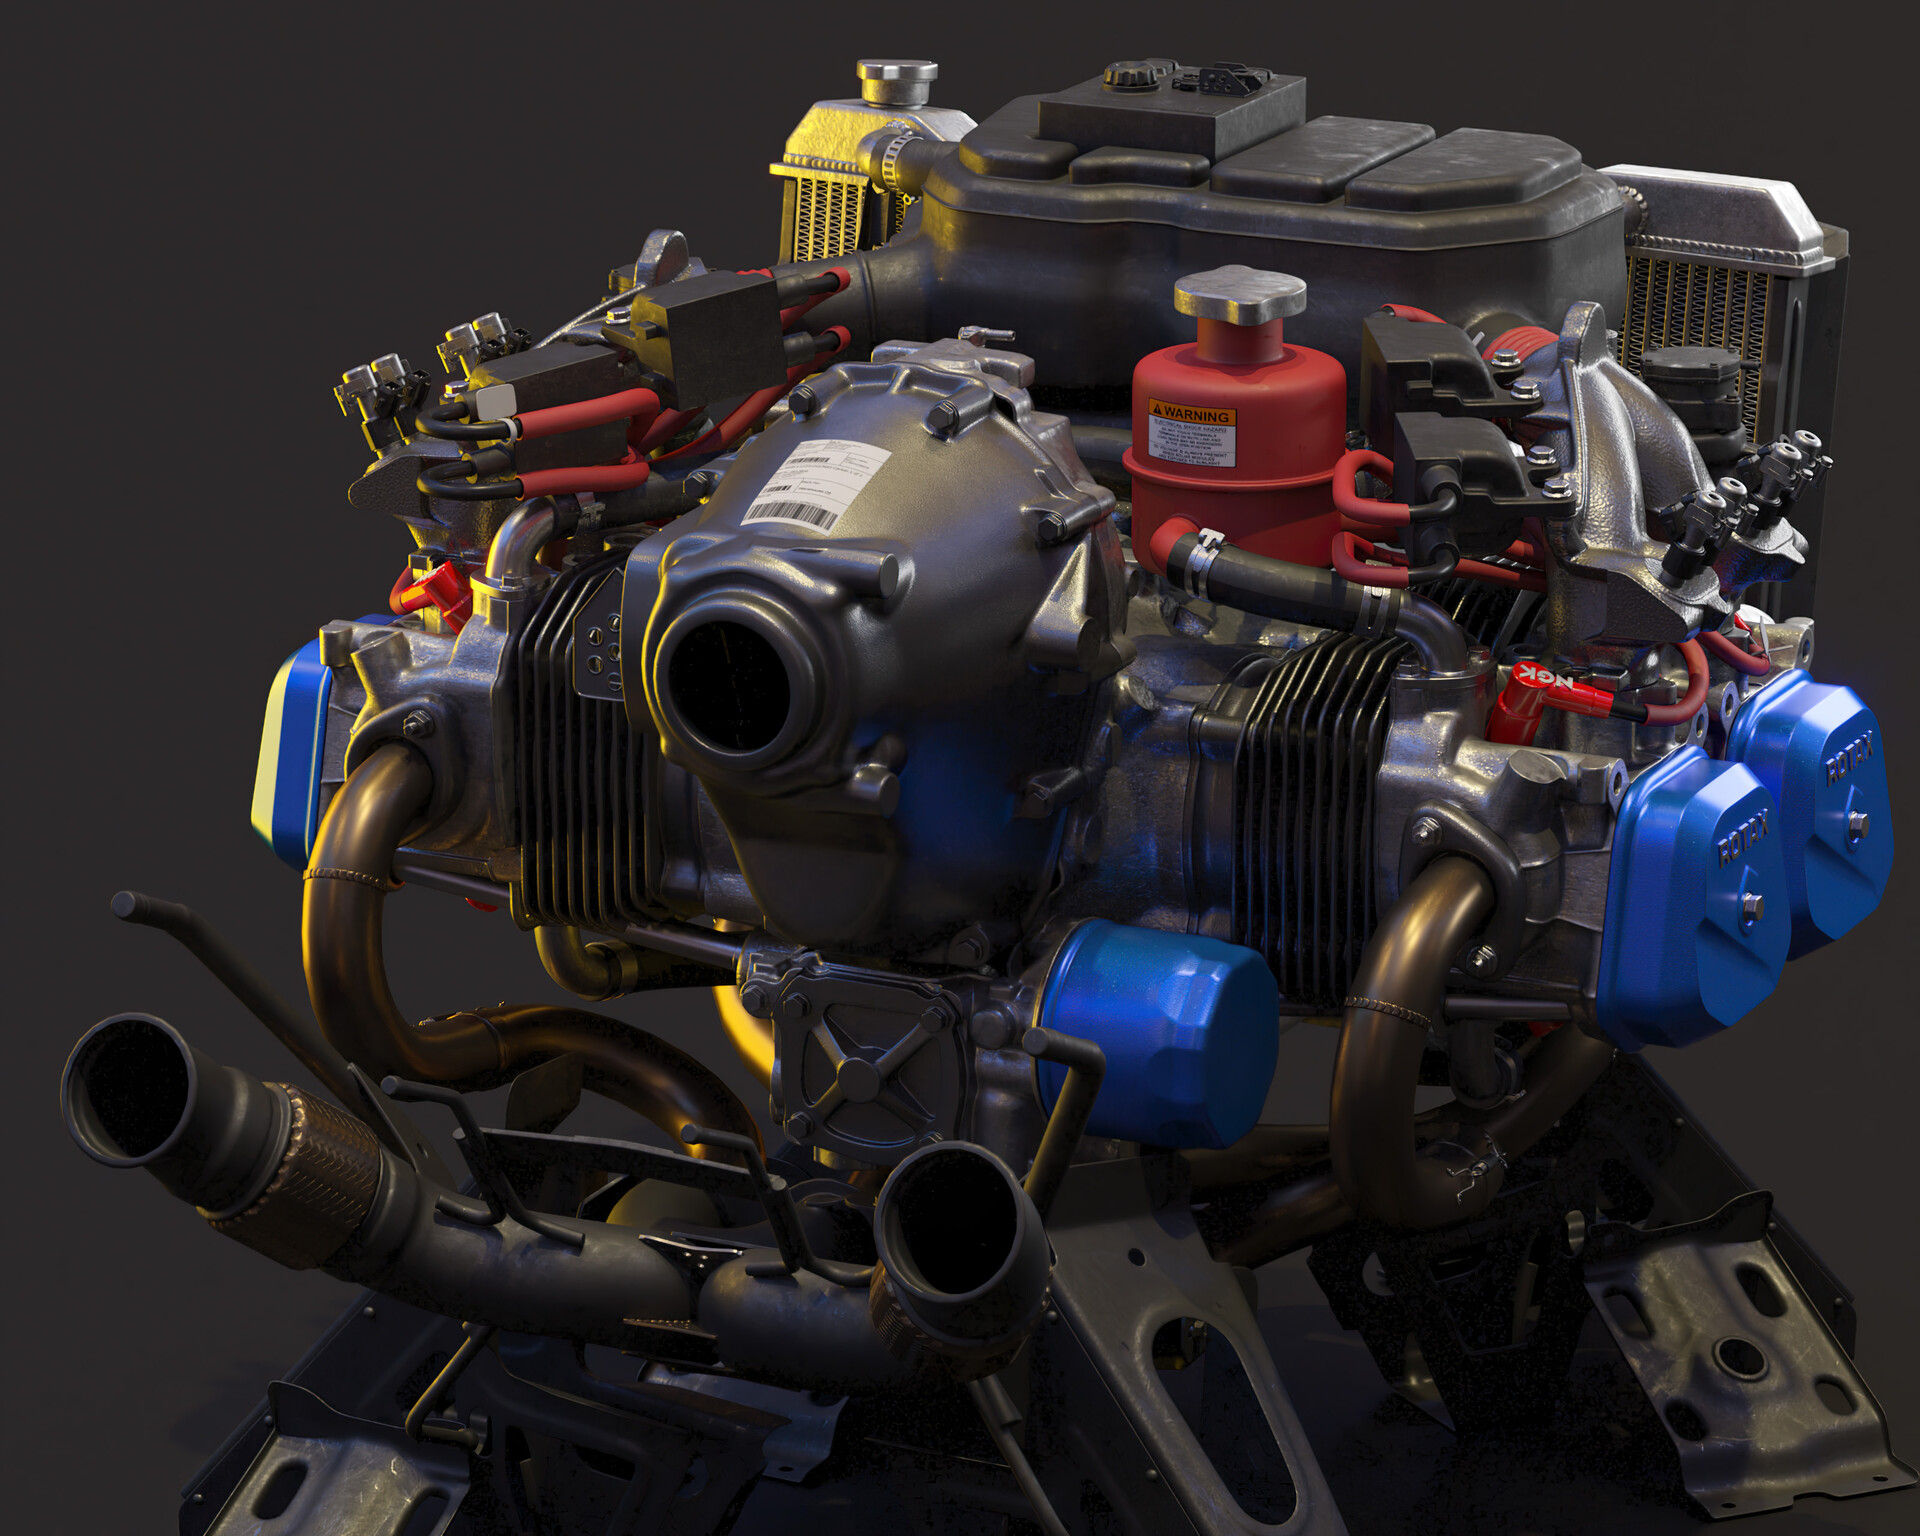 ArtStation - ROTAX 912 Engine